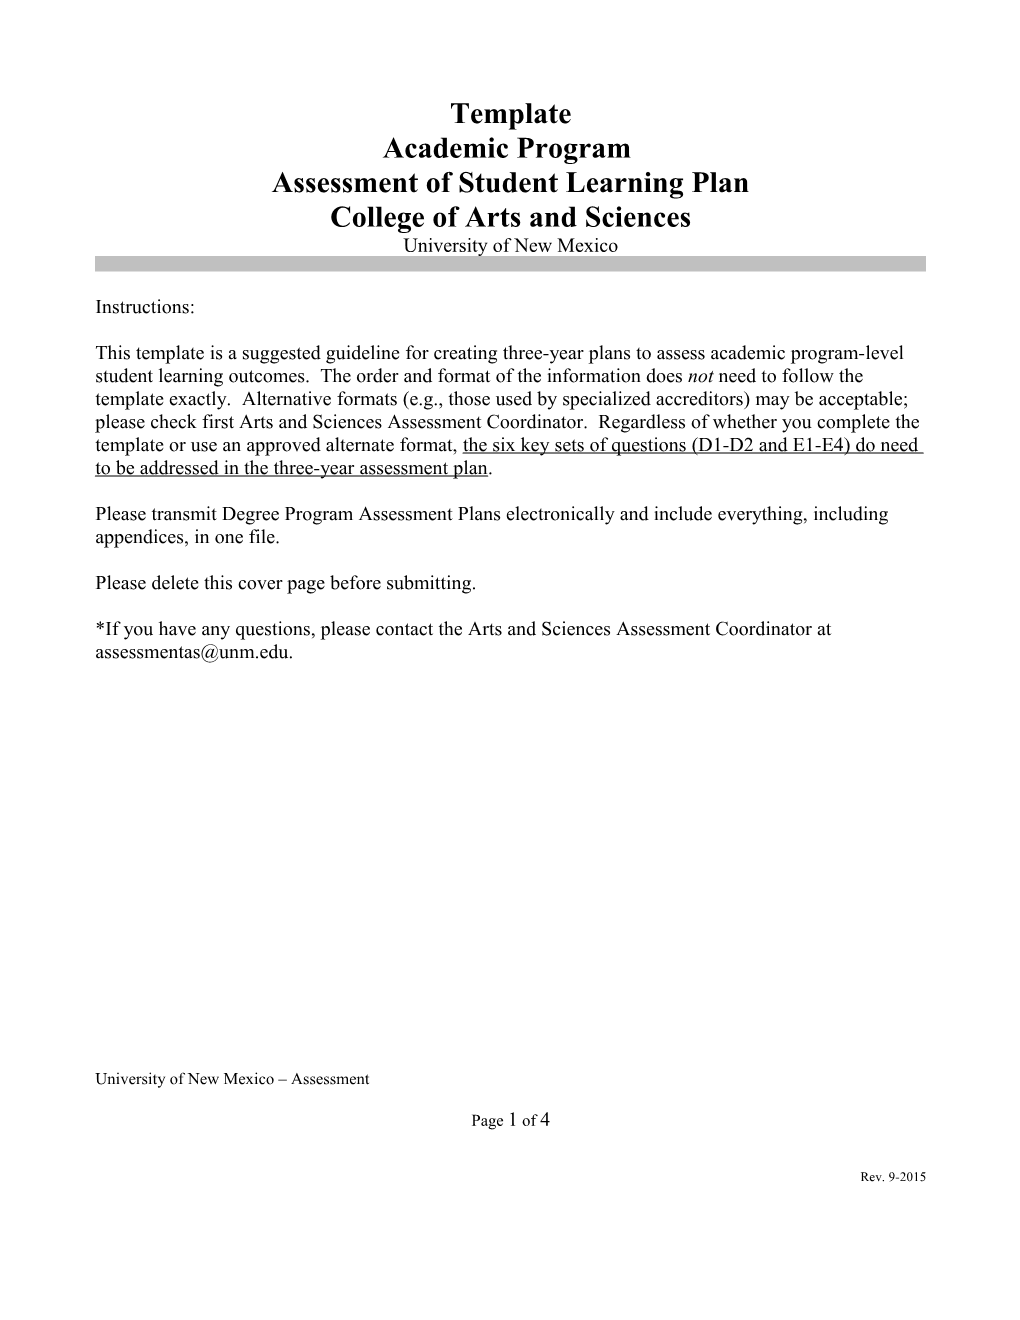 Assessment of Student Learning Plan